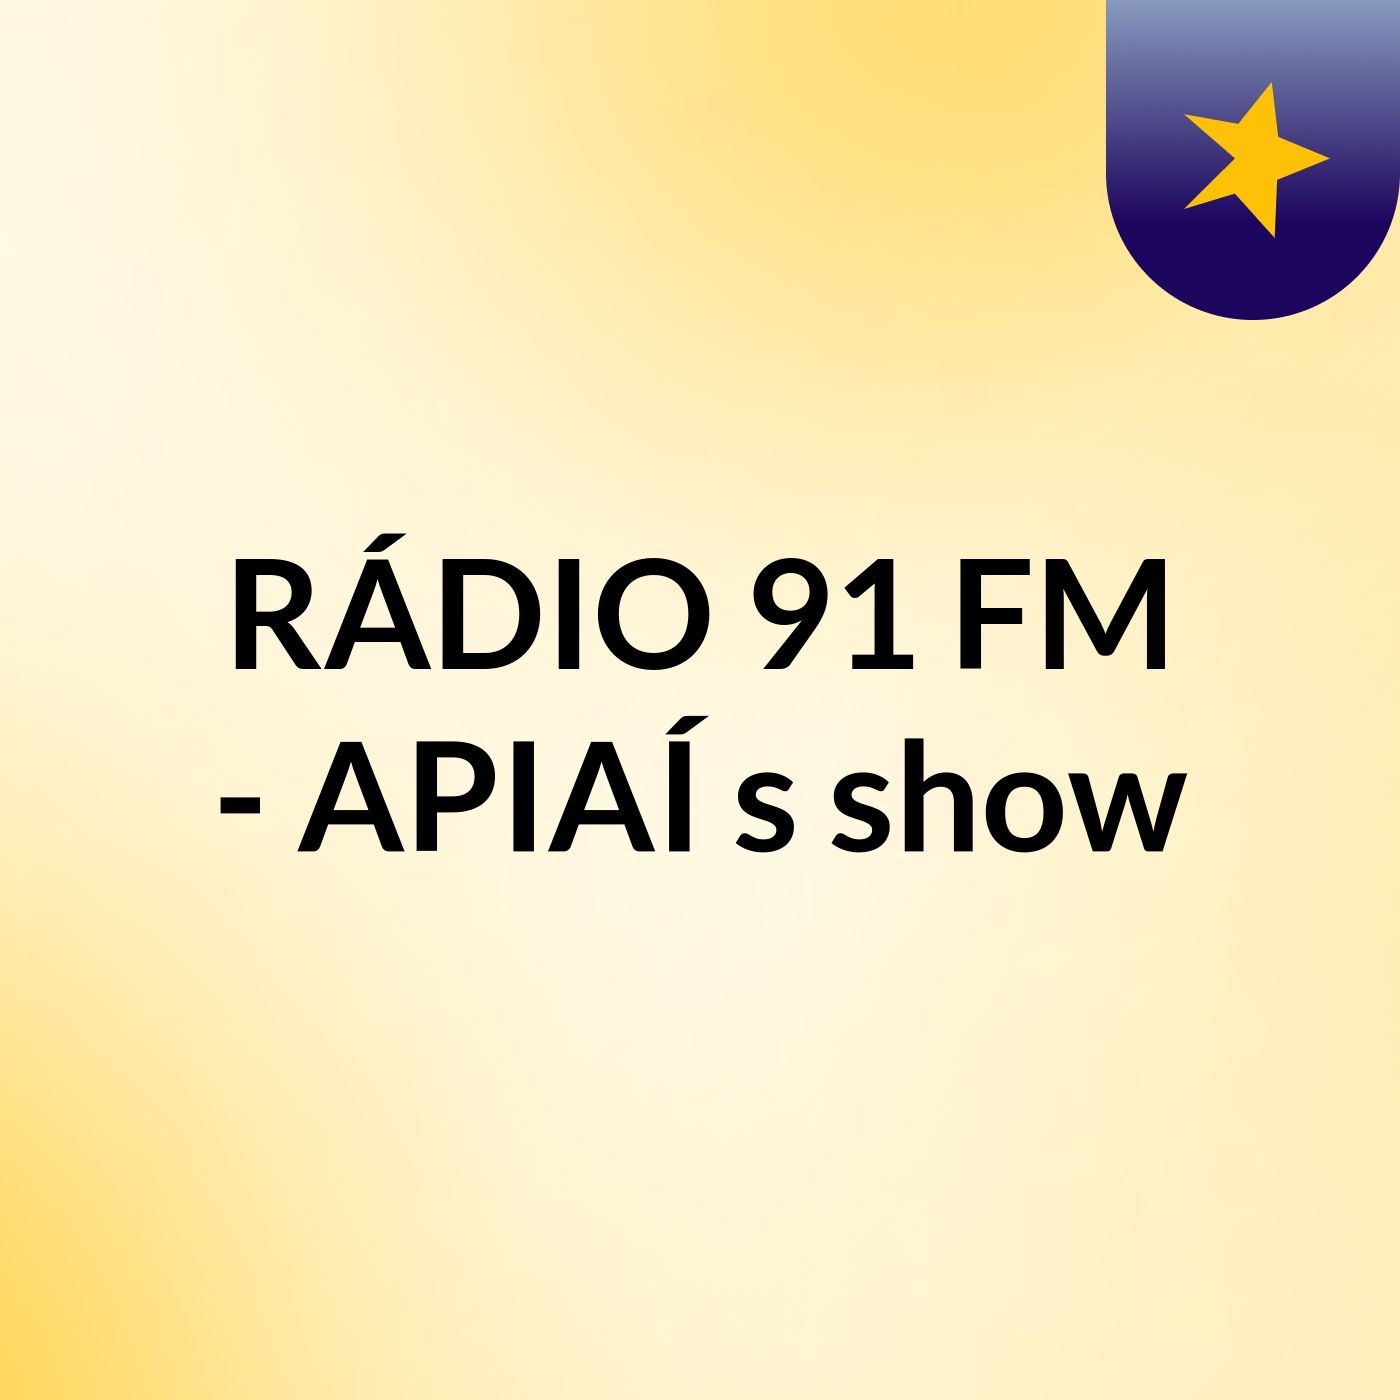 RÁDIO 91 FM - APIAÍ's show